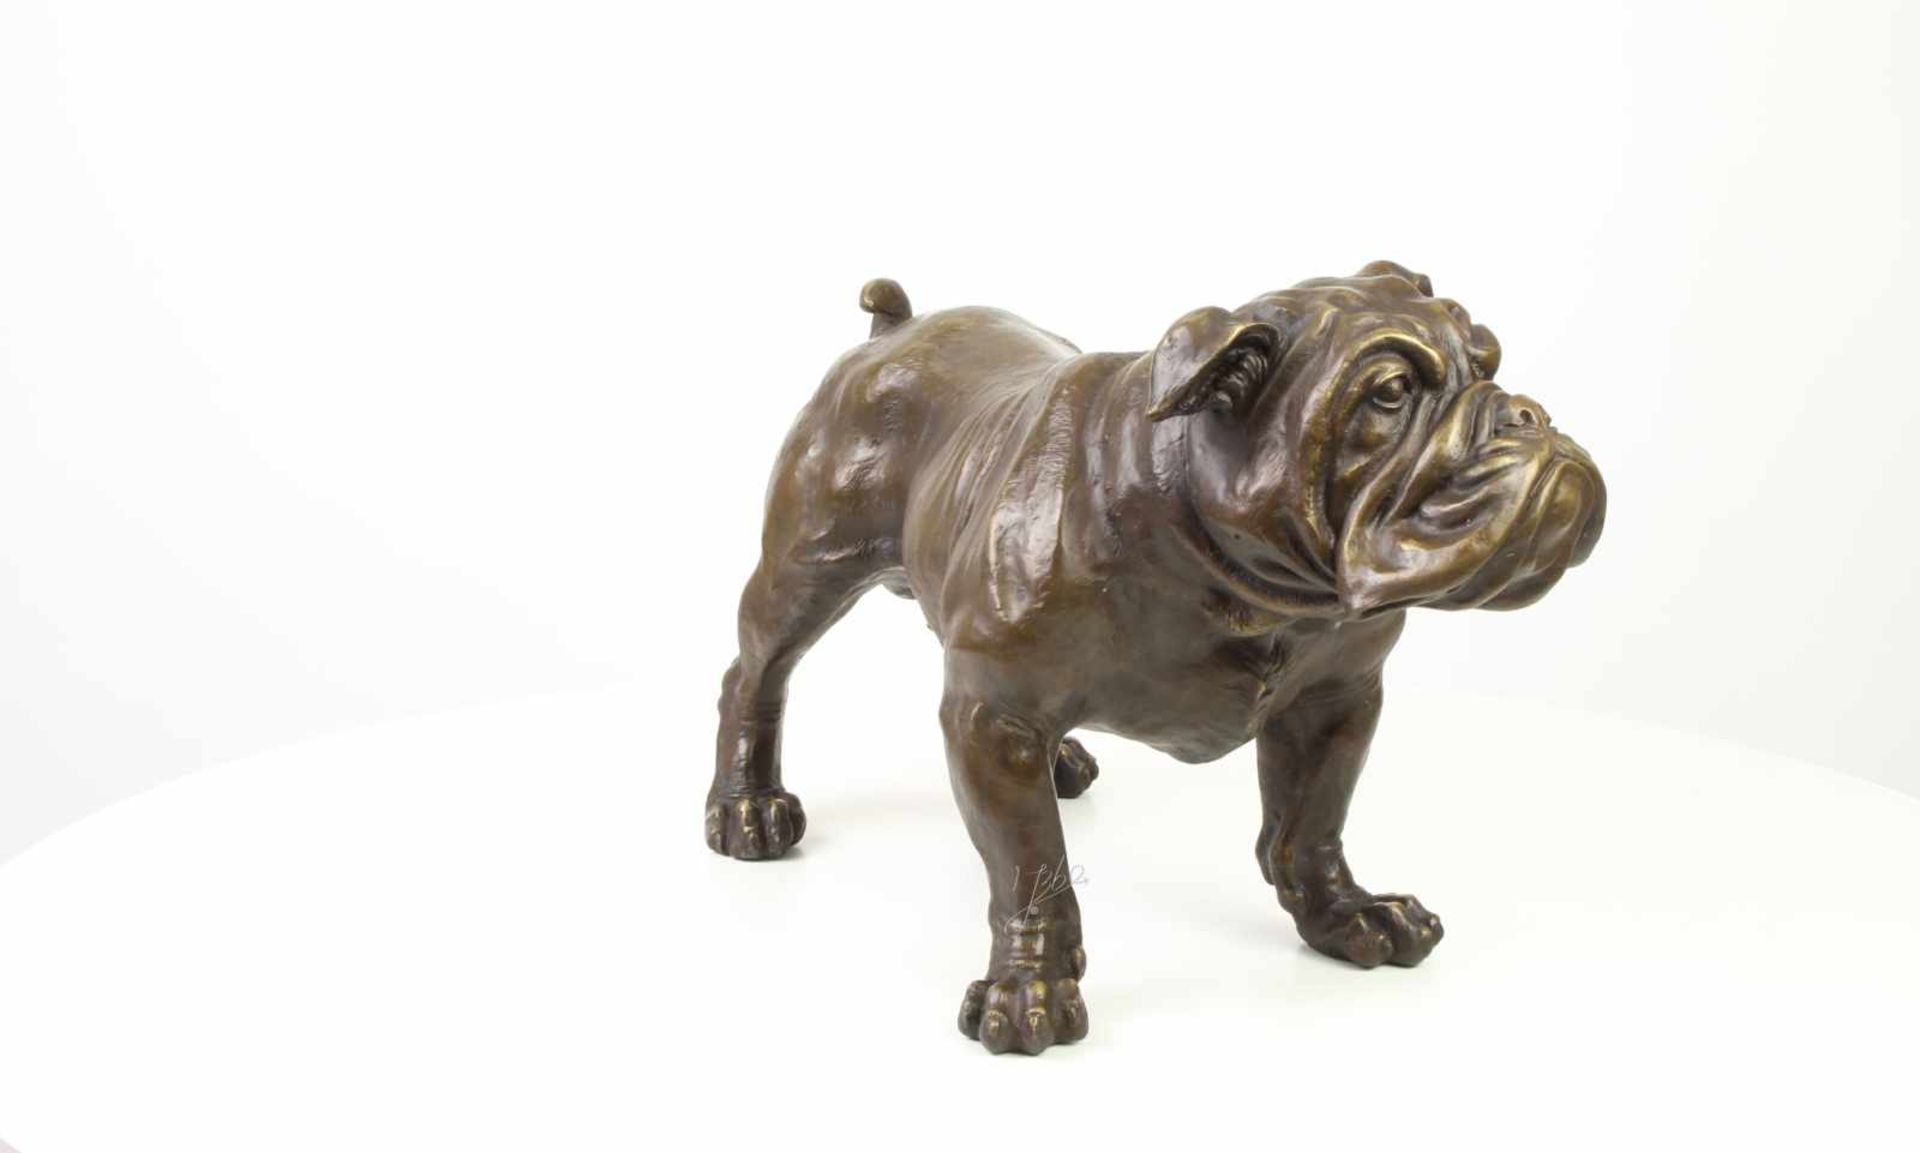 lebensgroße Bronze Skulptur BulldoggeBronze, naturgetreue und lebensgroße Ausformung, 31x24x54cm - Bild 3 aus 3